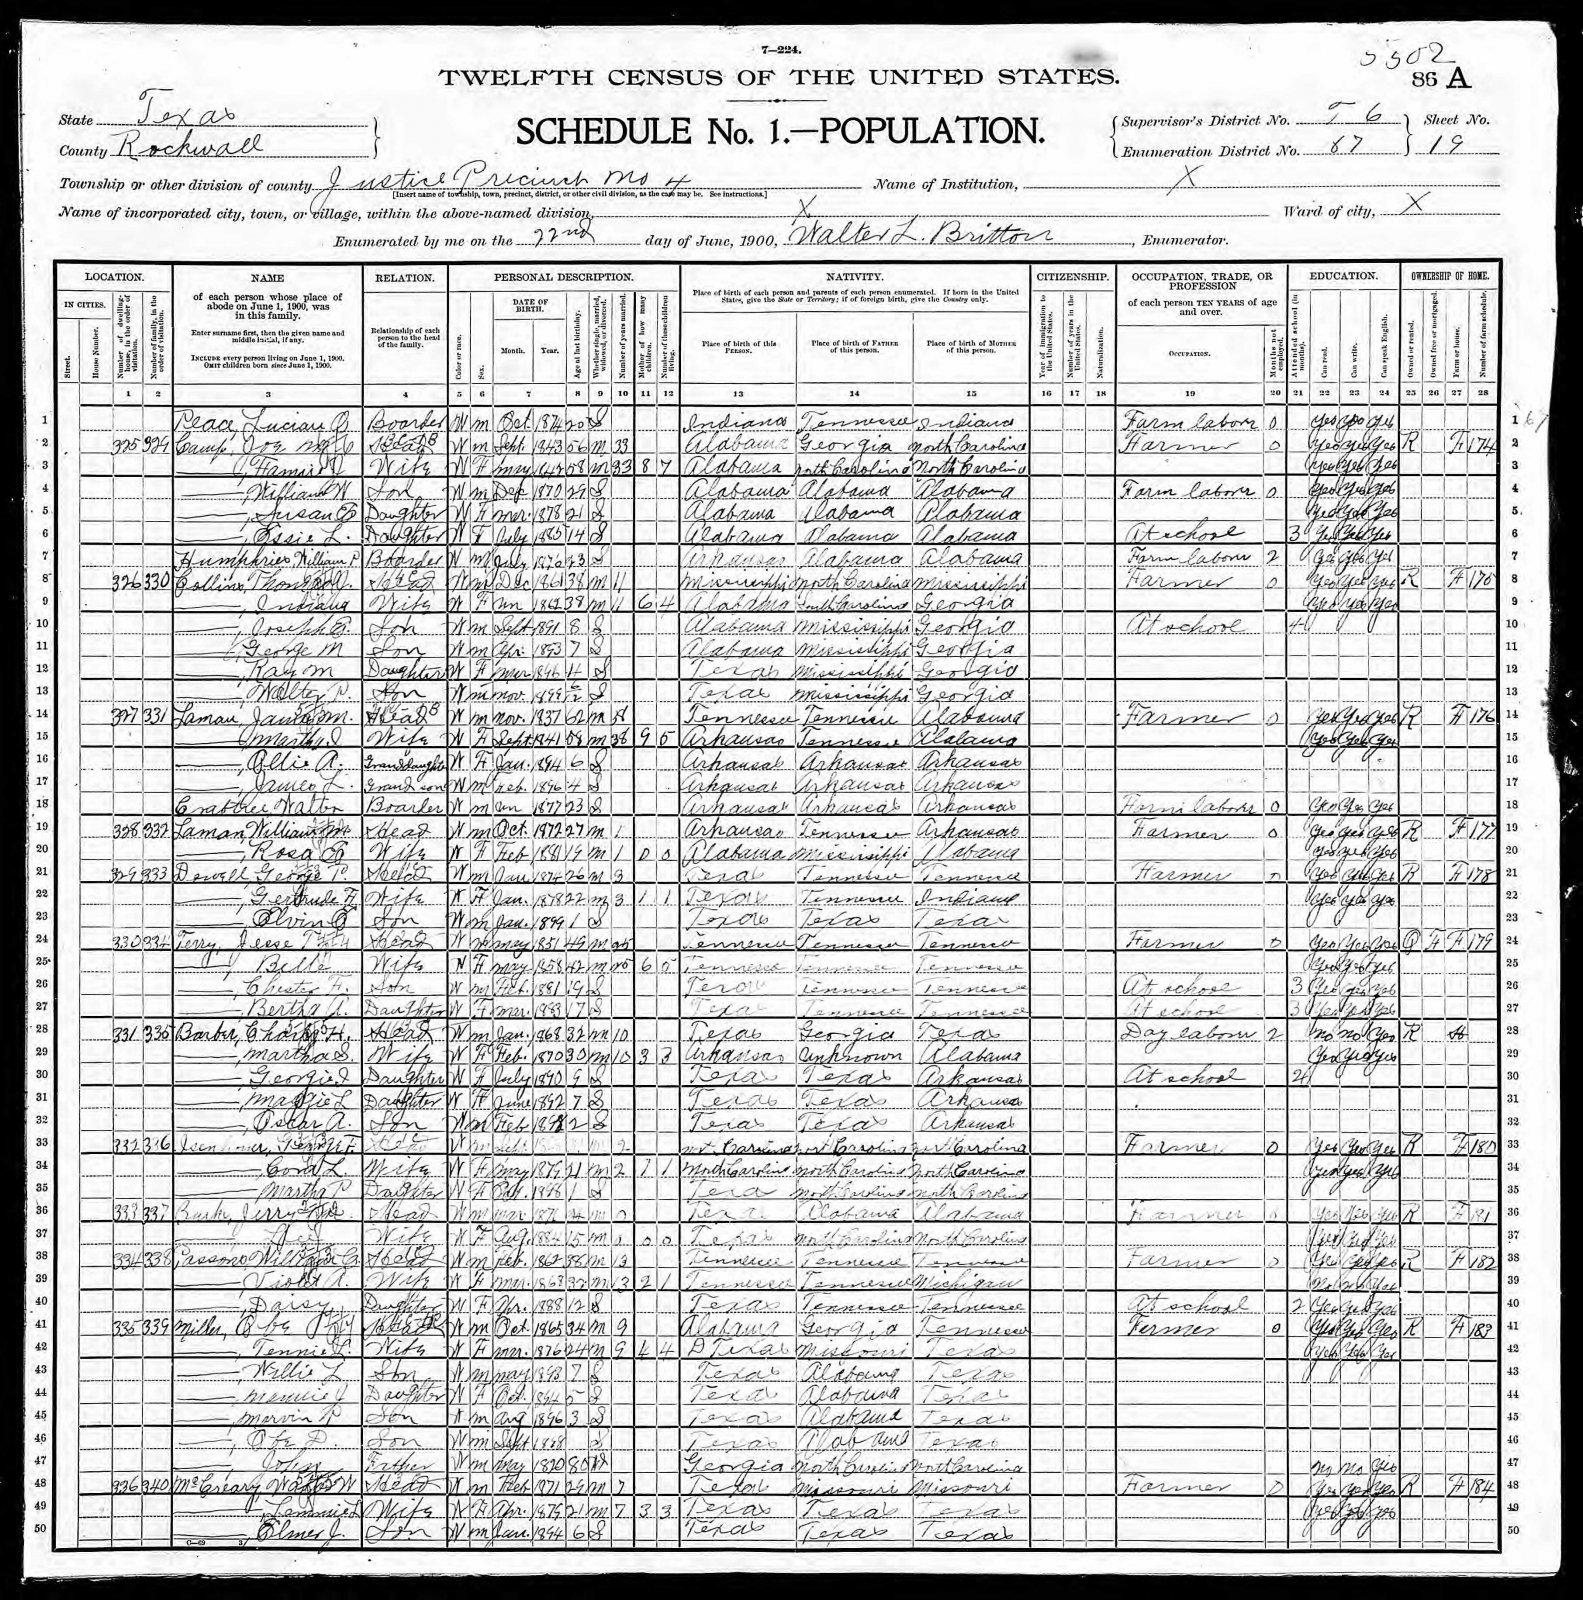 1900 census, Thomas J. Collins.jpg